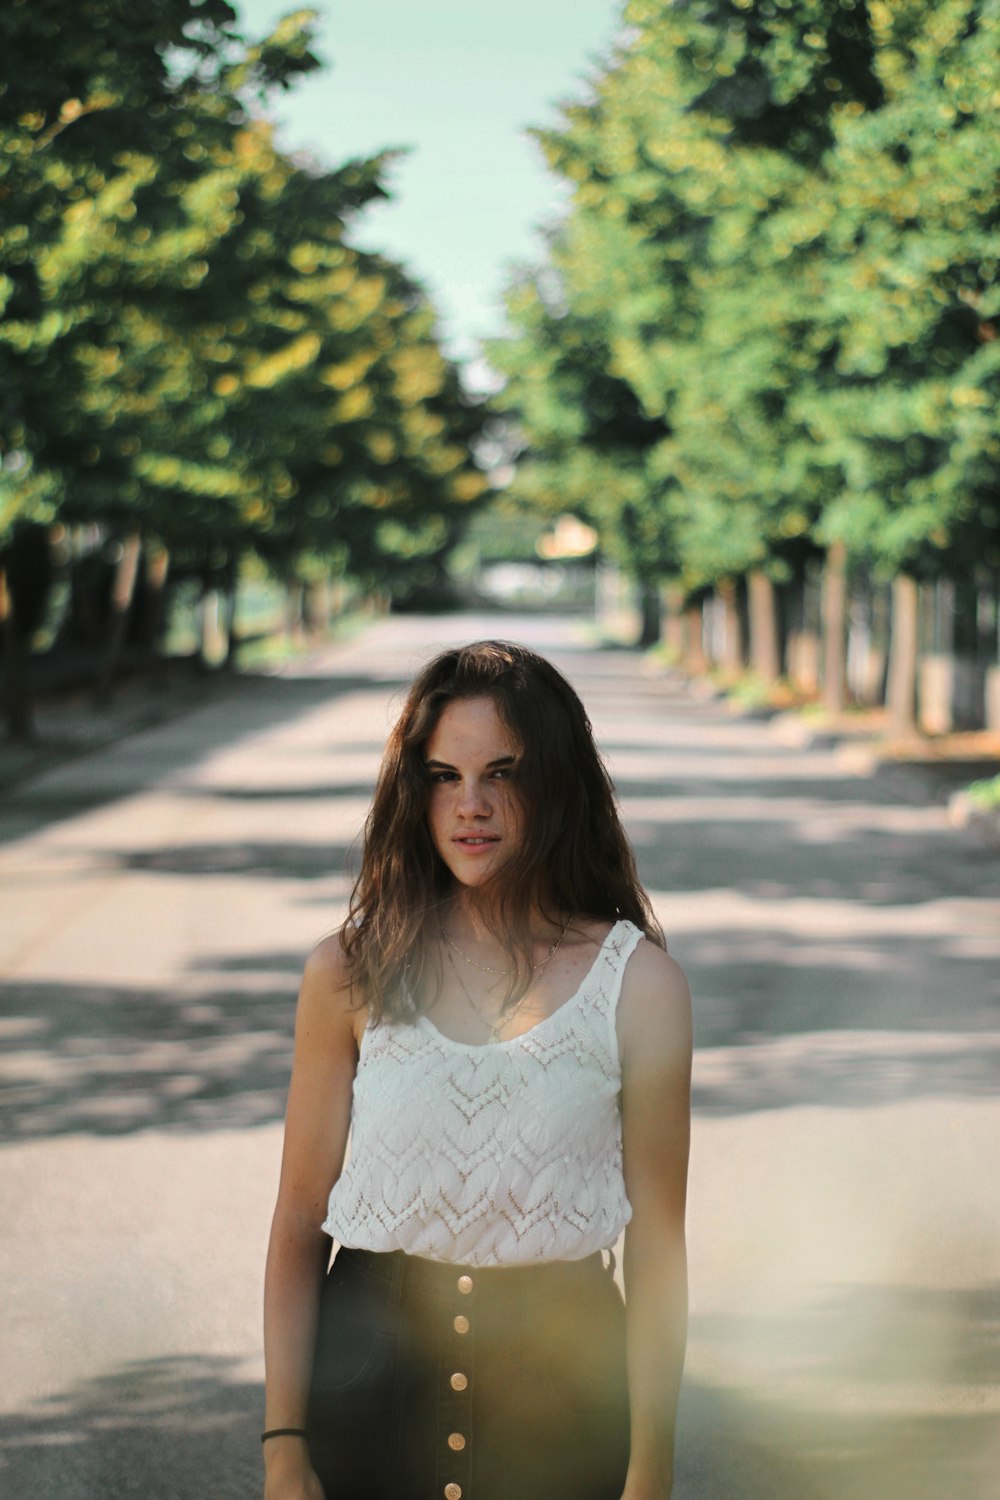 girl standing on road between trees